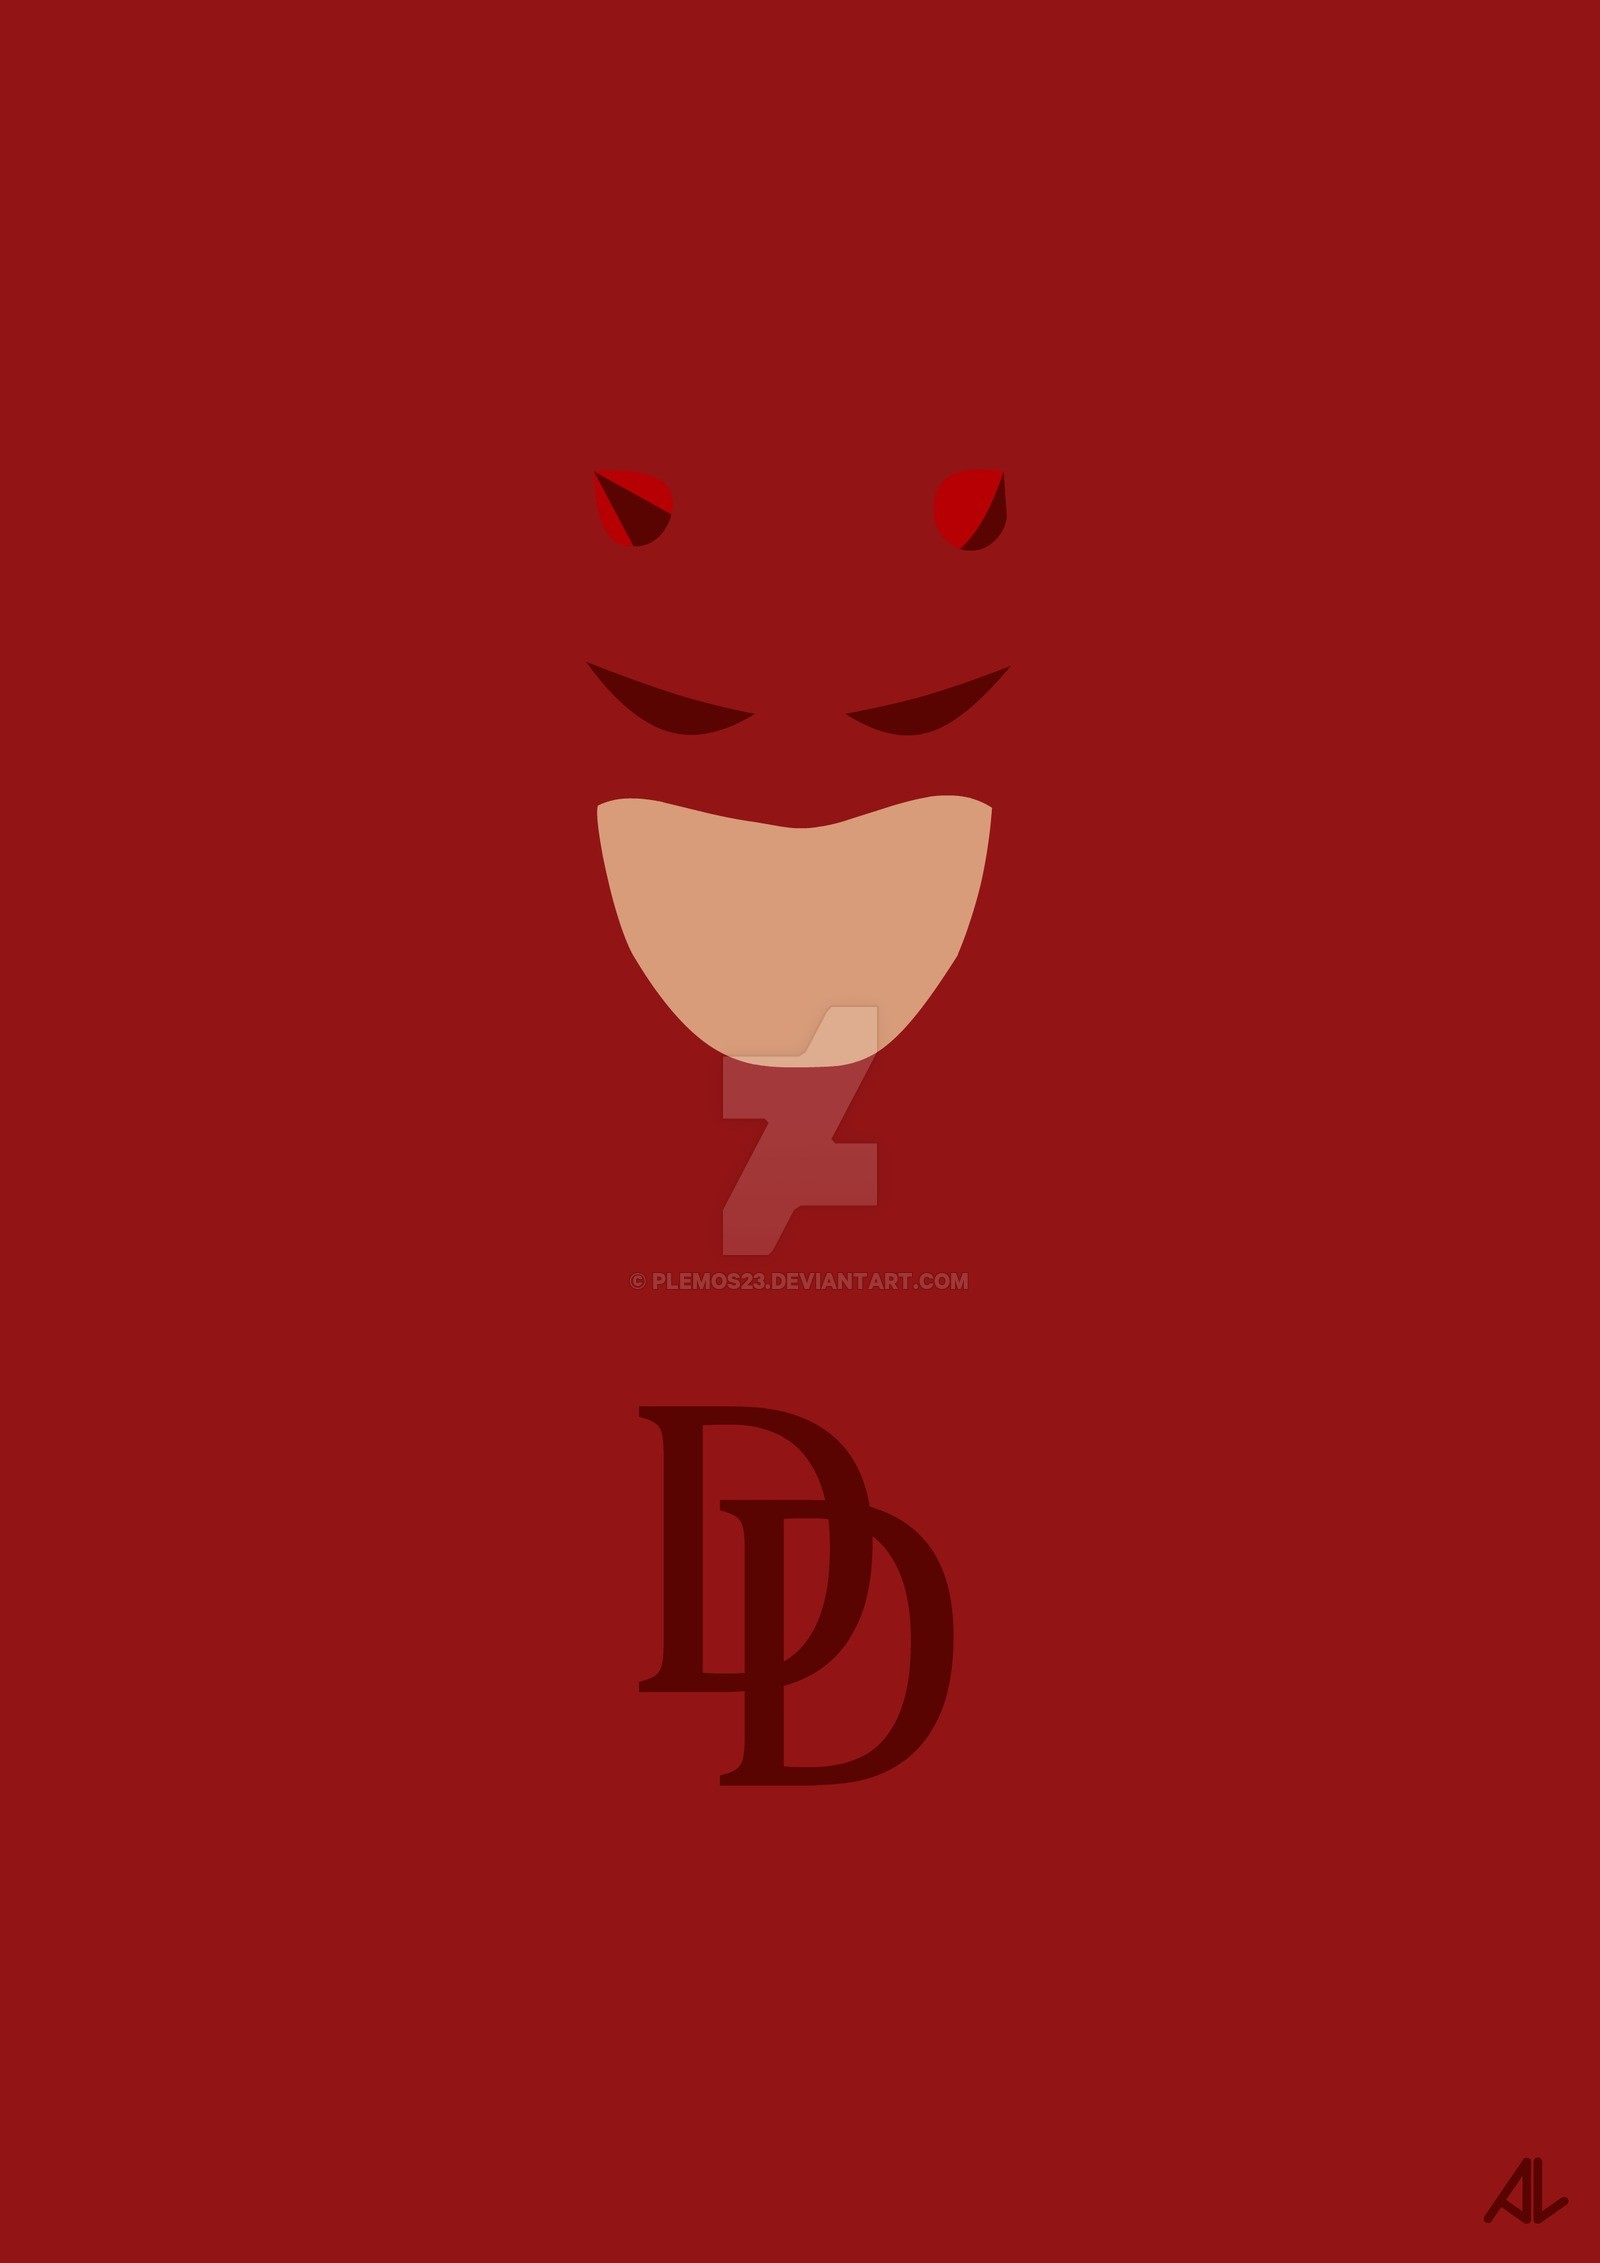 Poster12 Daredevil by plemos23 on DeviantArt